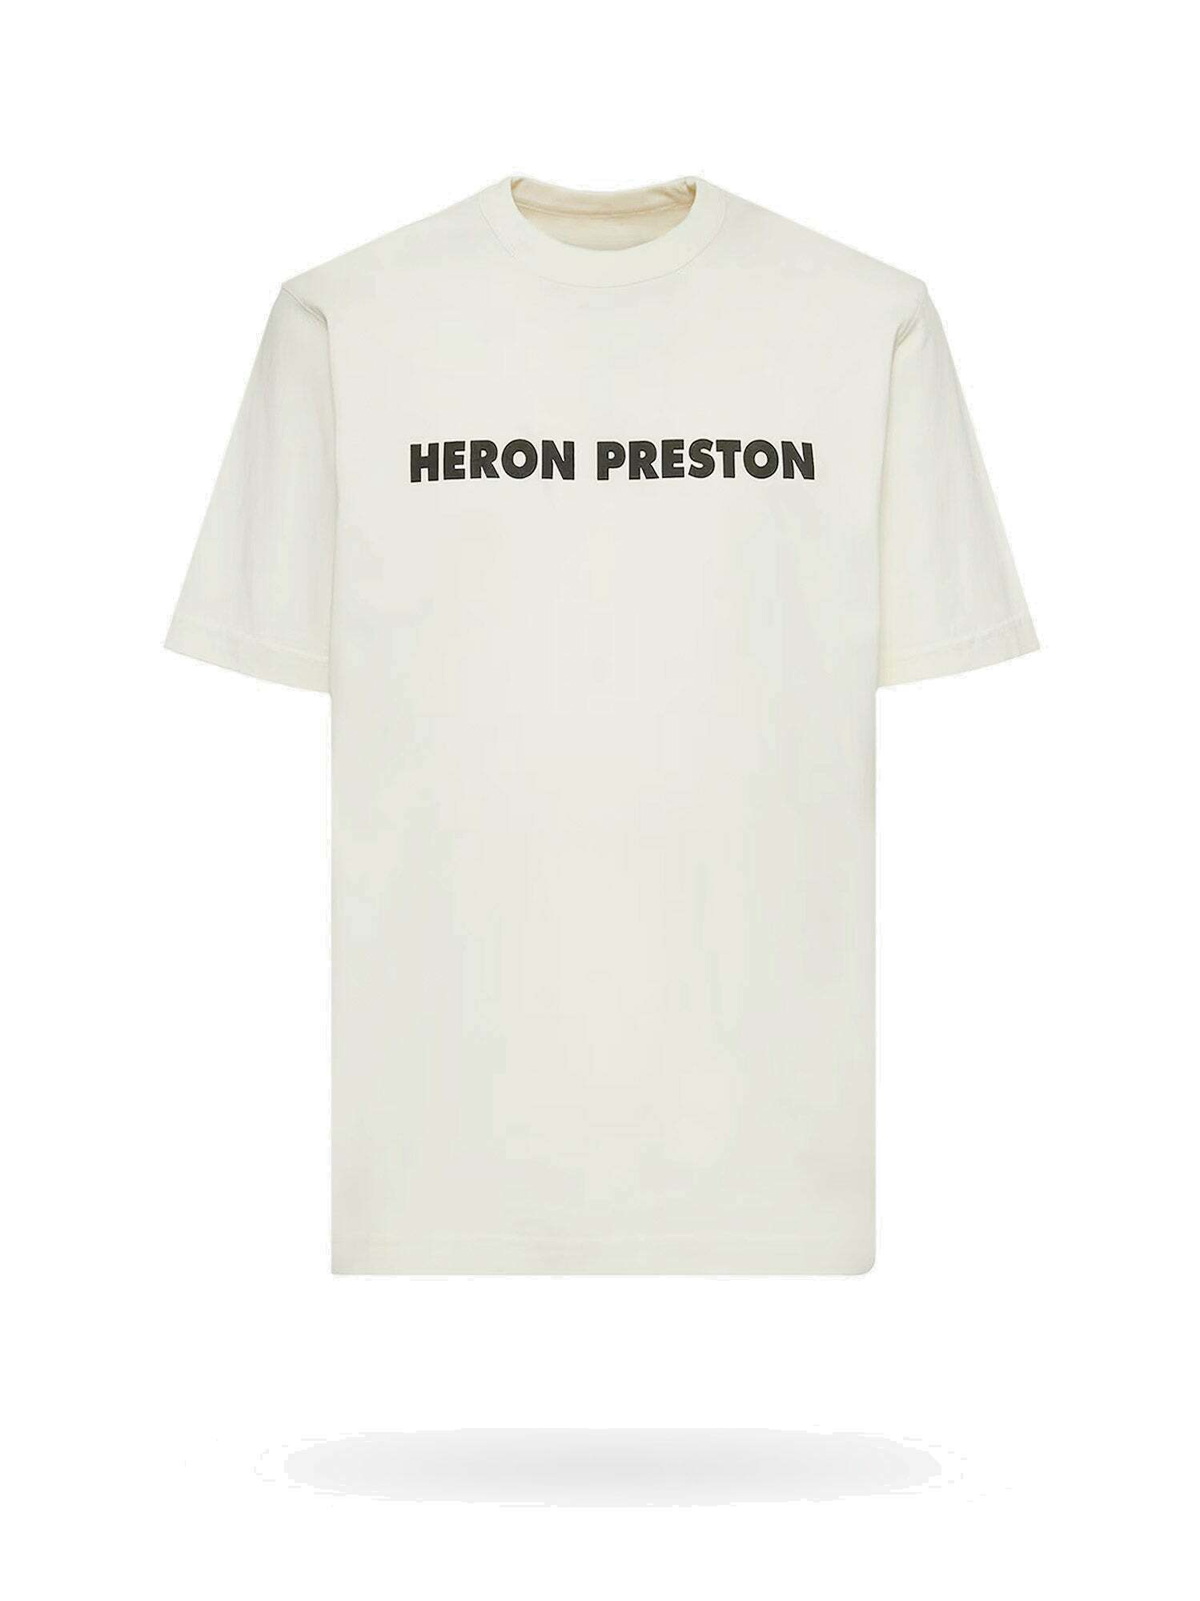 Buy Heron Preston Gray Active Top - Grey White At 80% Off